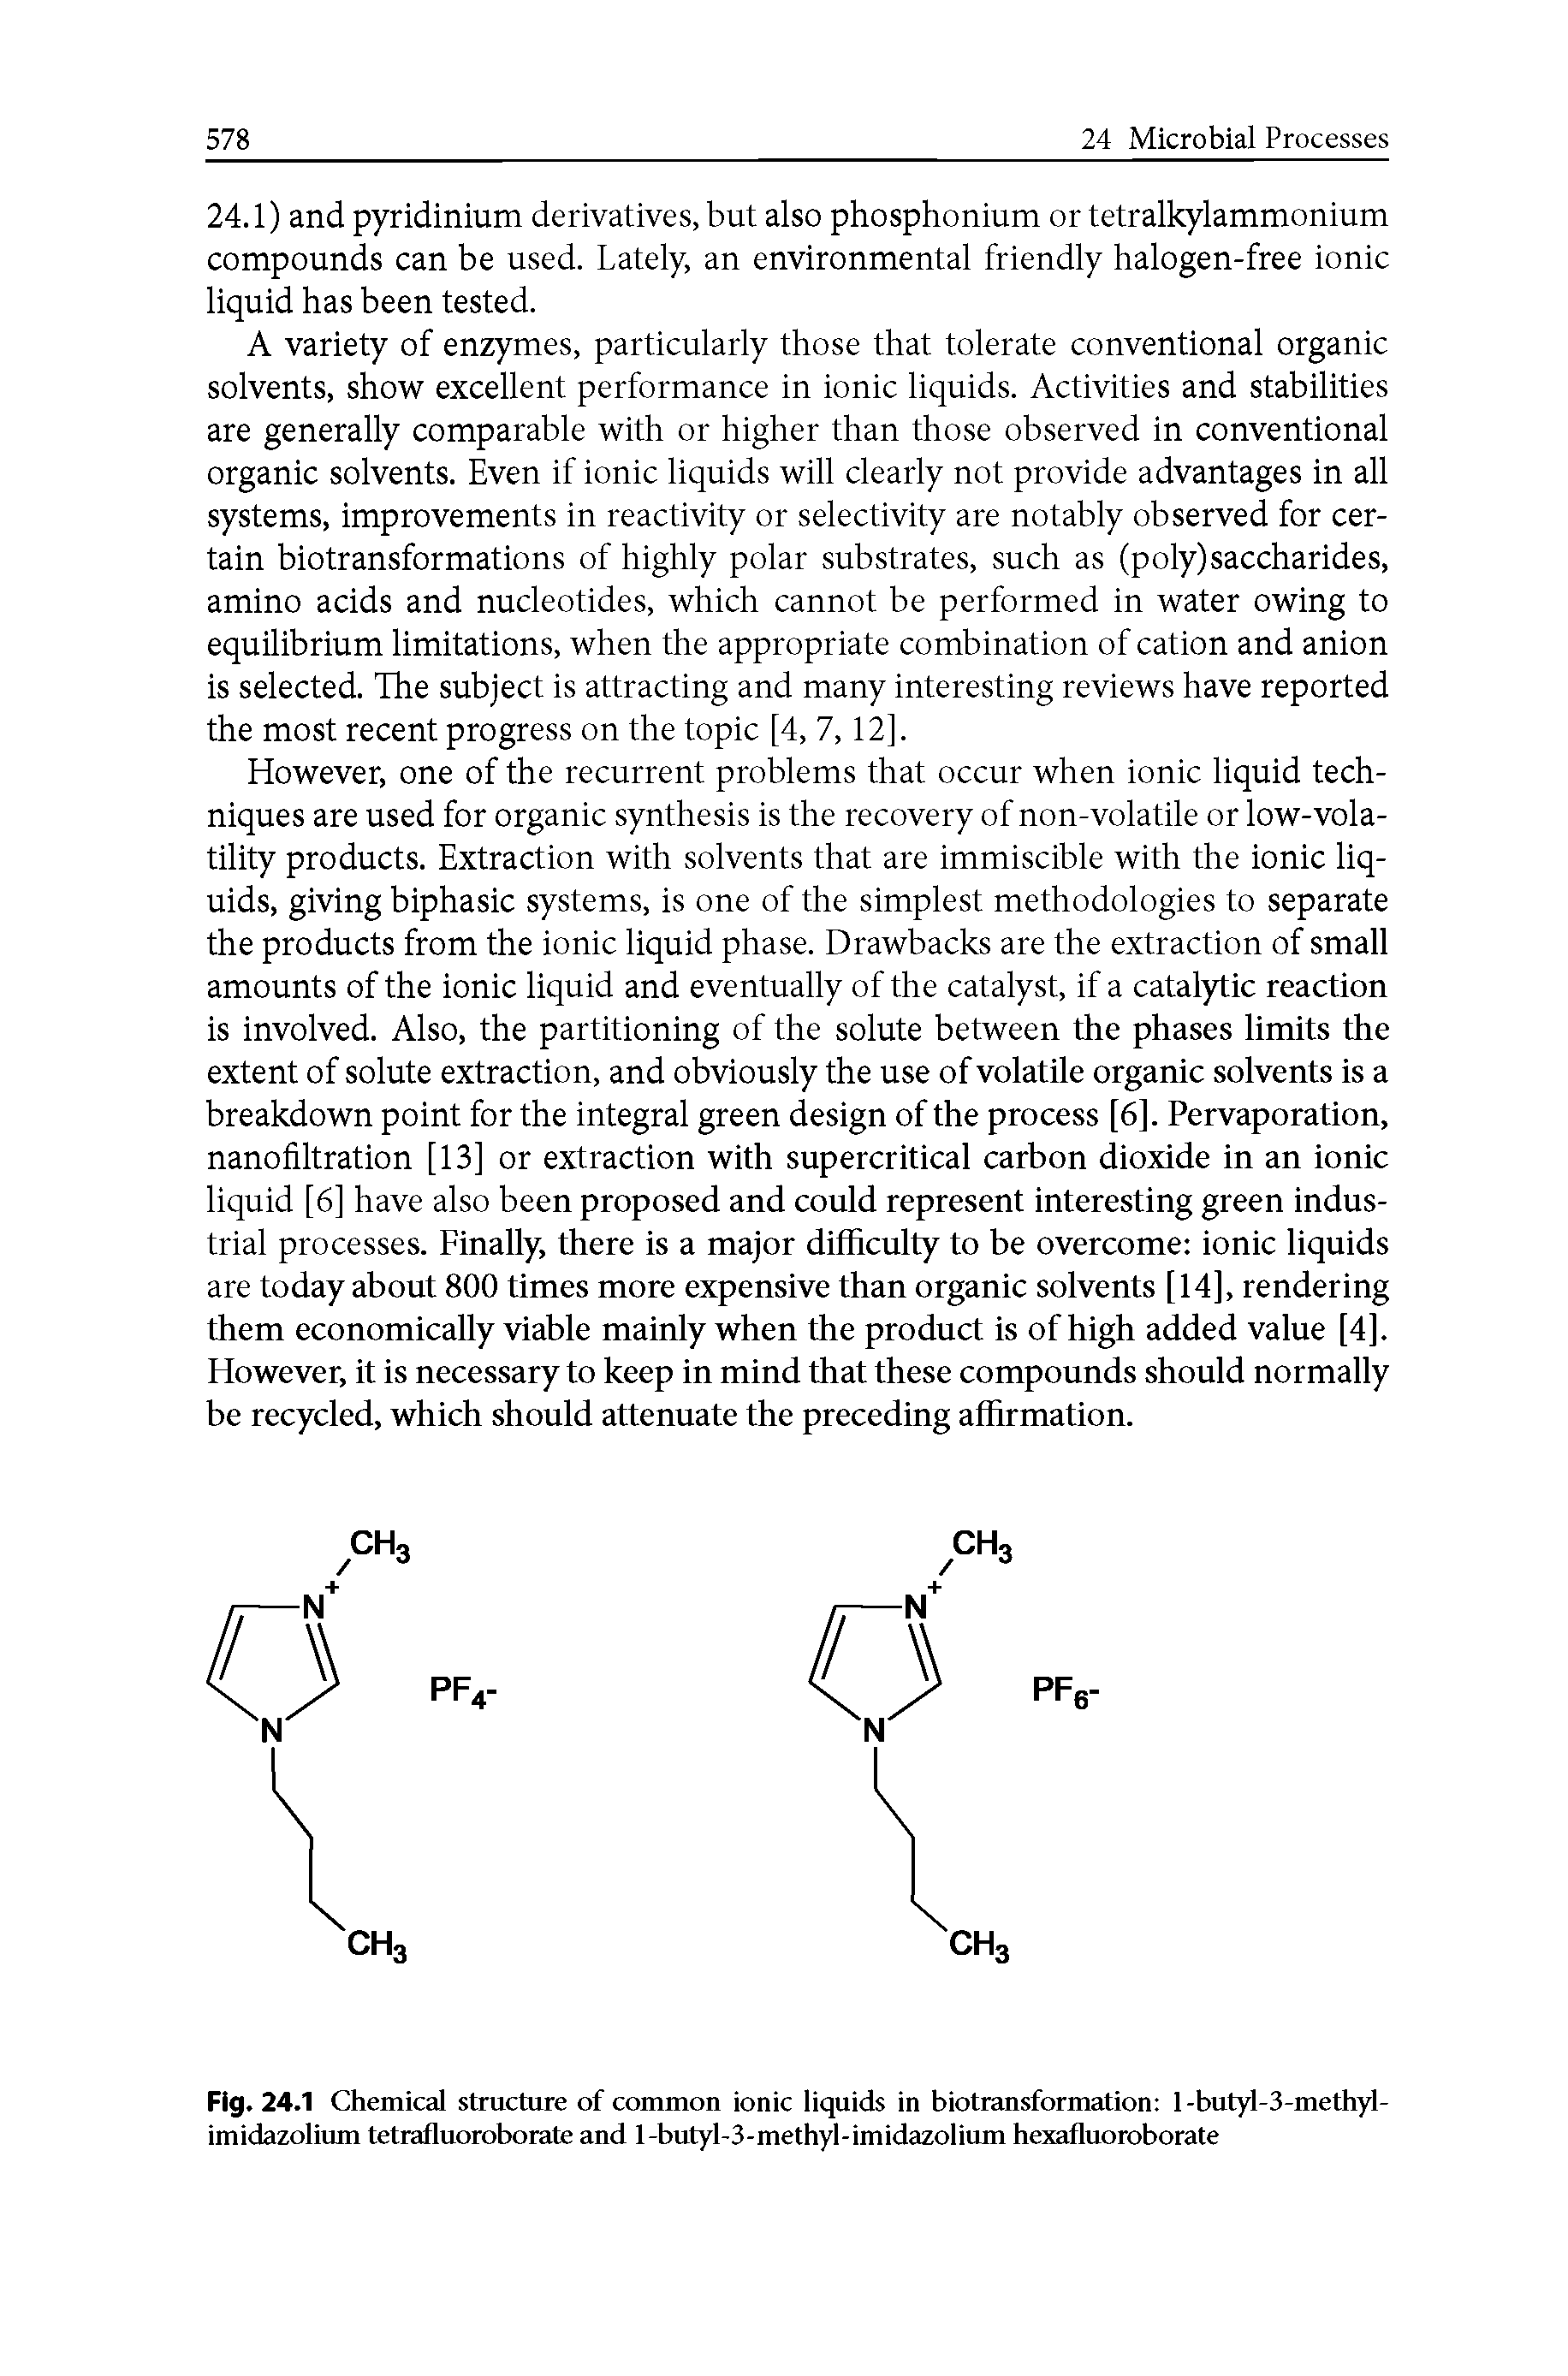 Fig. 24.1 Chemical structure of common ionic liquids in biotransformation 1-butyl-3-methyl-imidazolimn tetrafluoroborate and l-butyl-3-methyl-imidazolium hexafluoroborate...